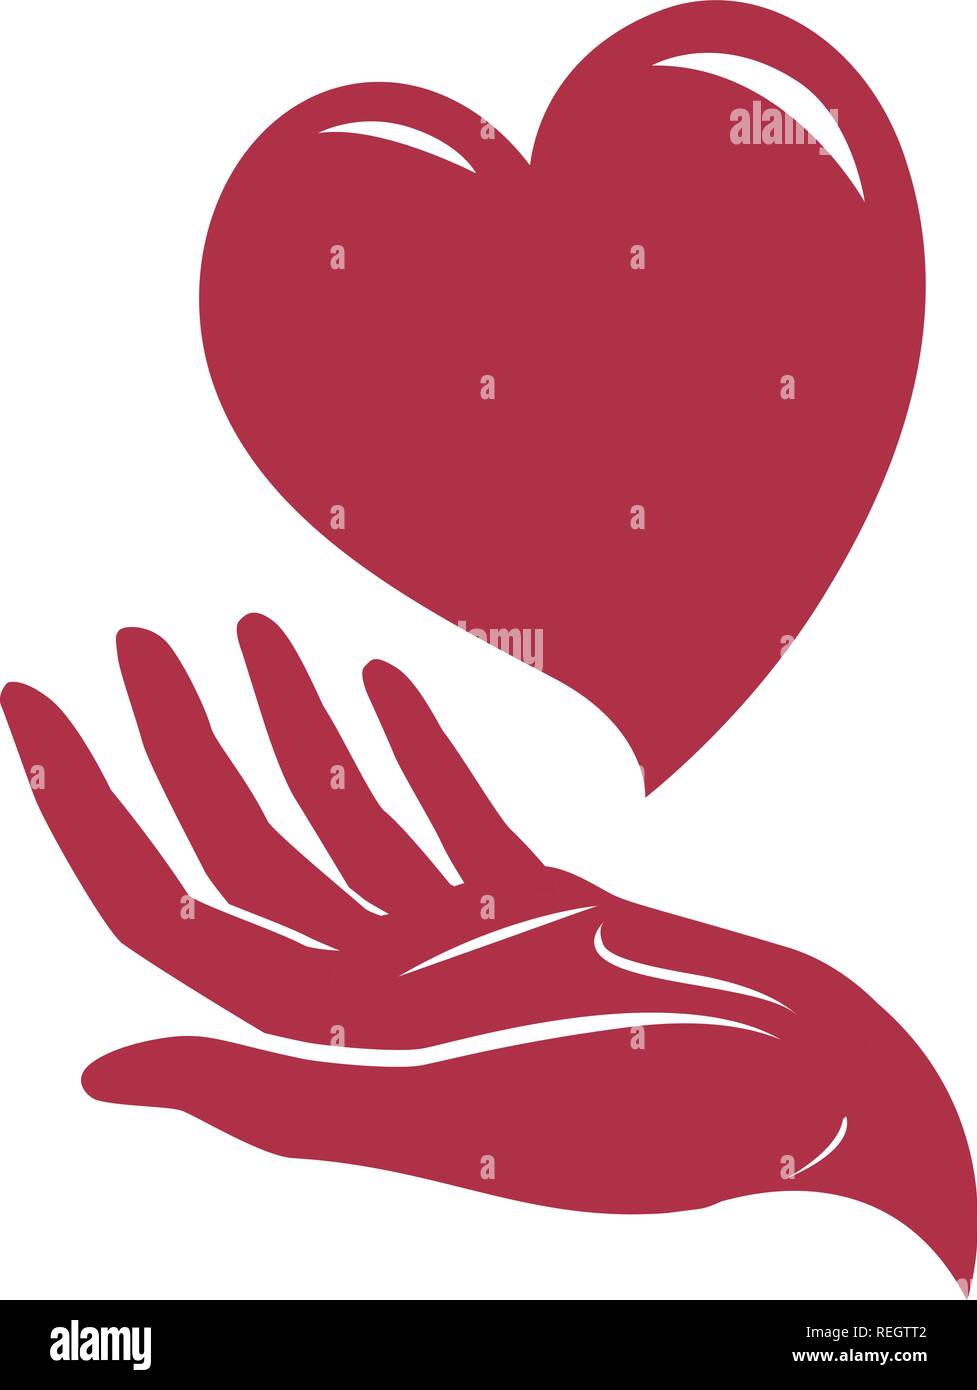 Heart in hand logo. Health, care, love symbol or icon. Vector illustration Stock Vector